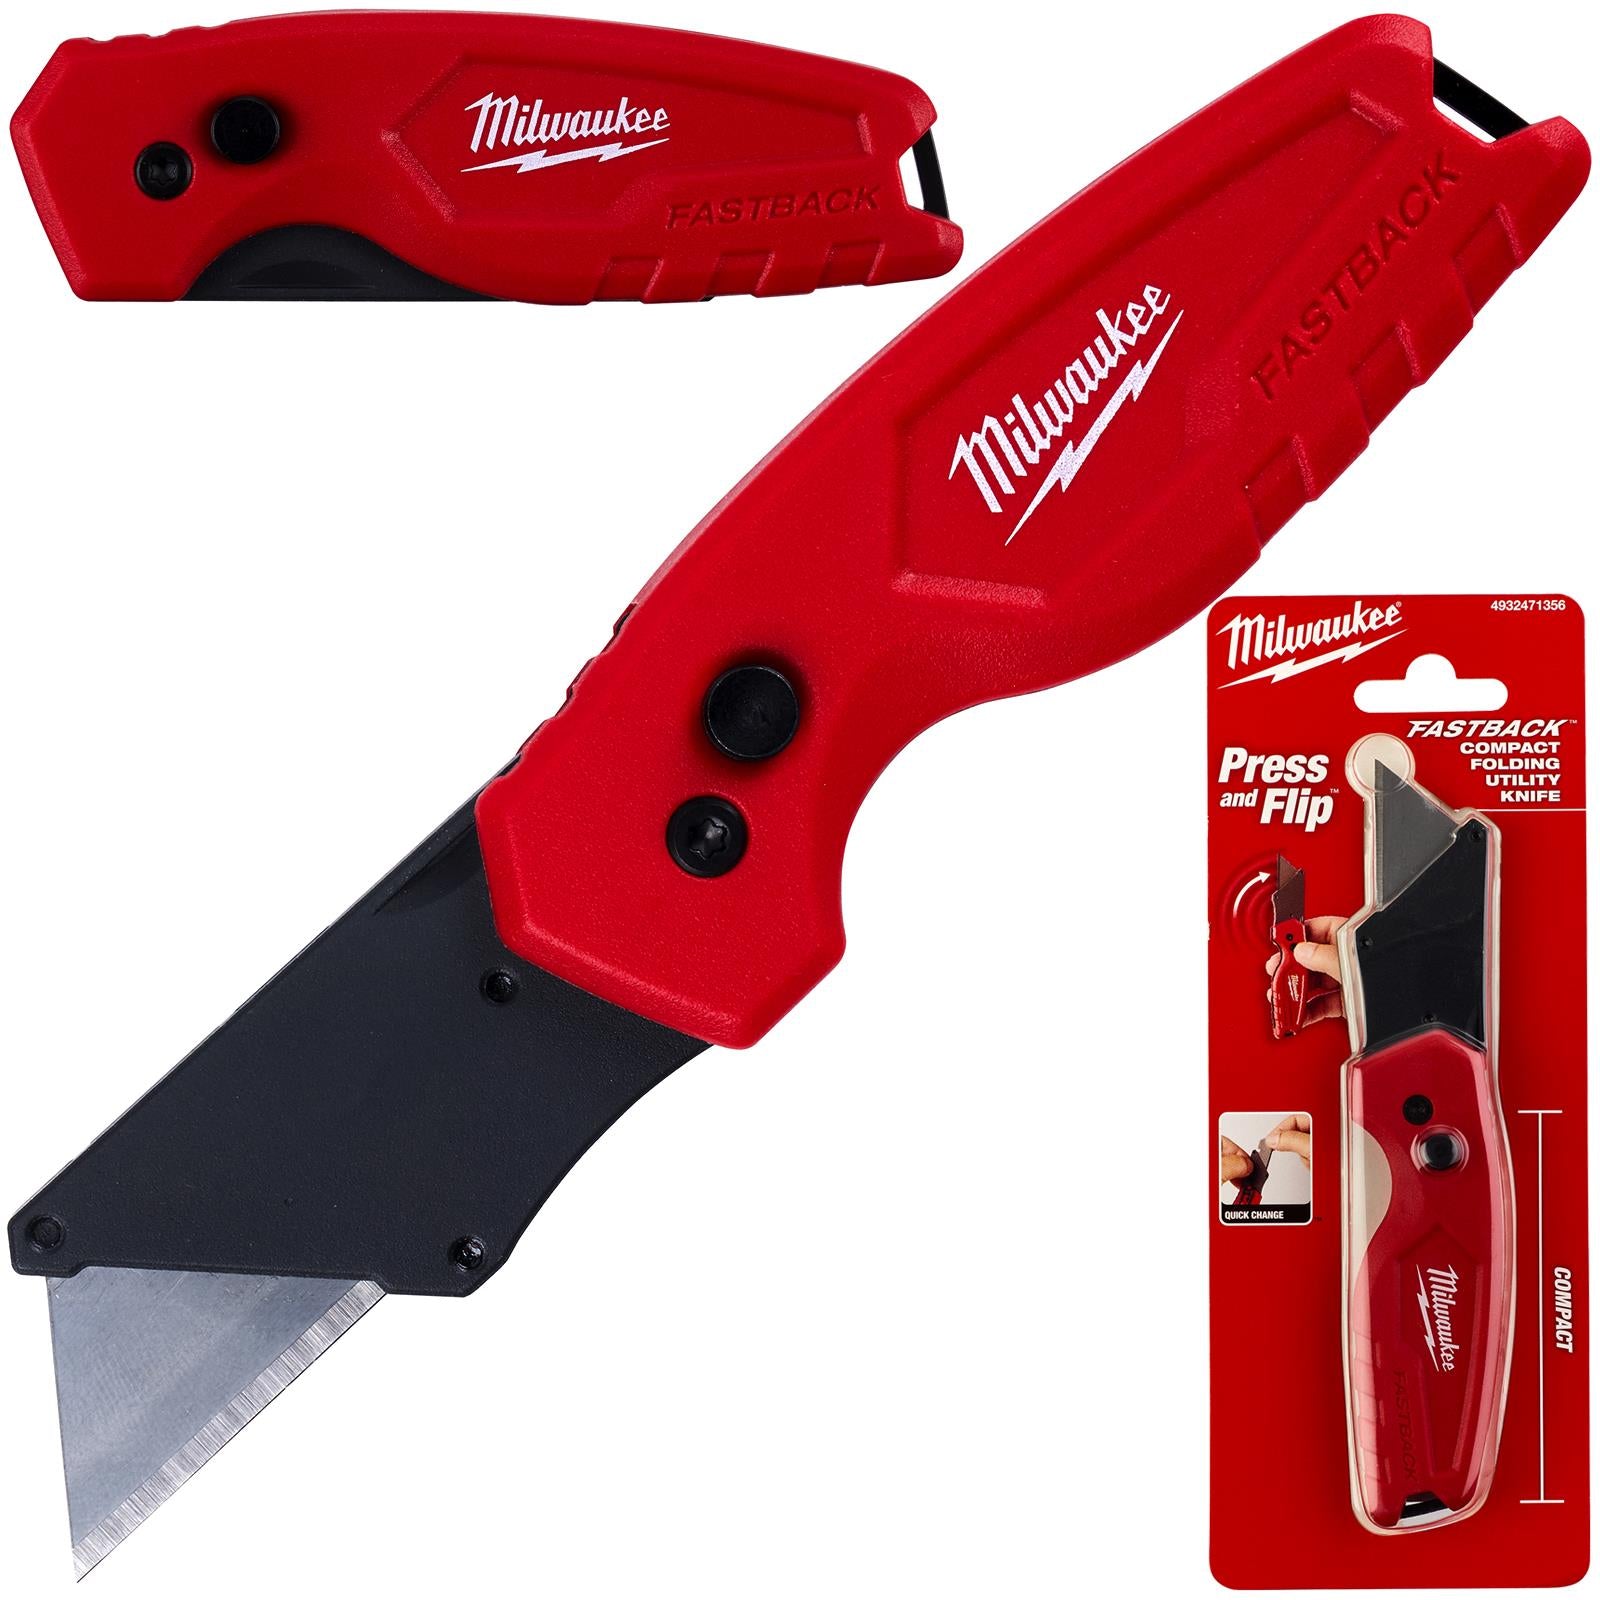 Milwaukee FASTBACK Compact Flip Utility Knife Cutter Cutting Blade